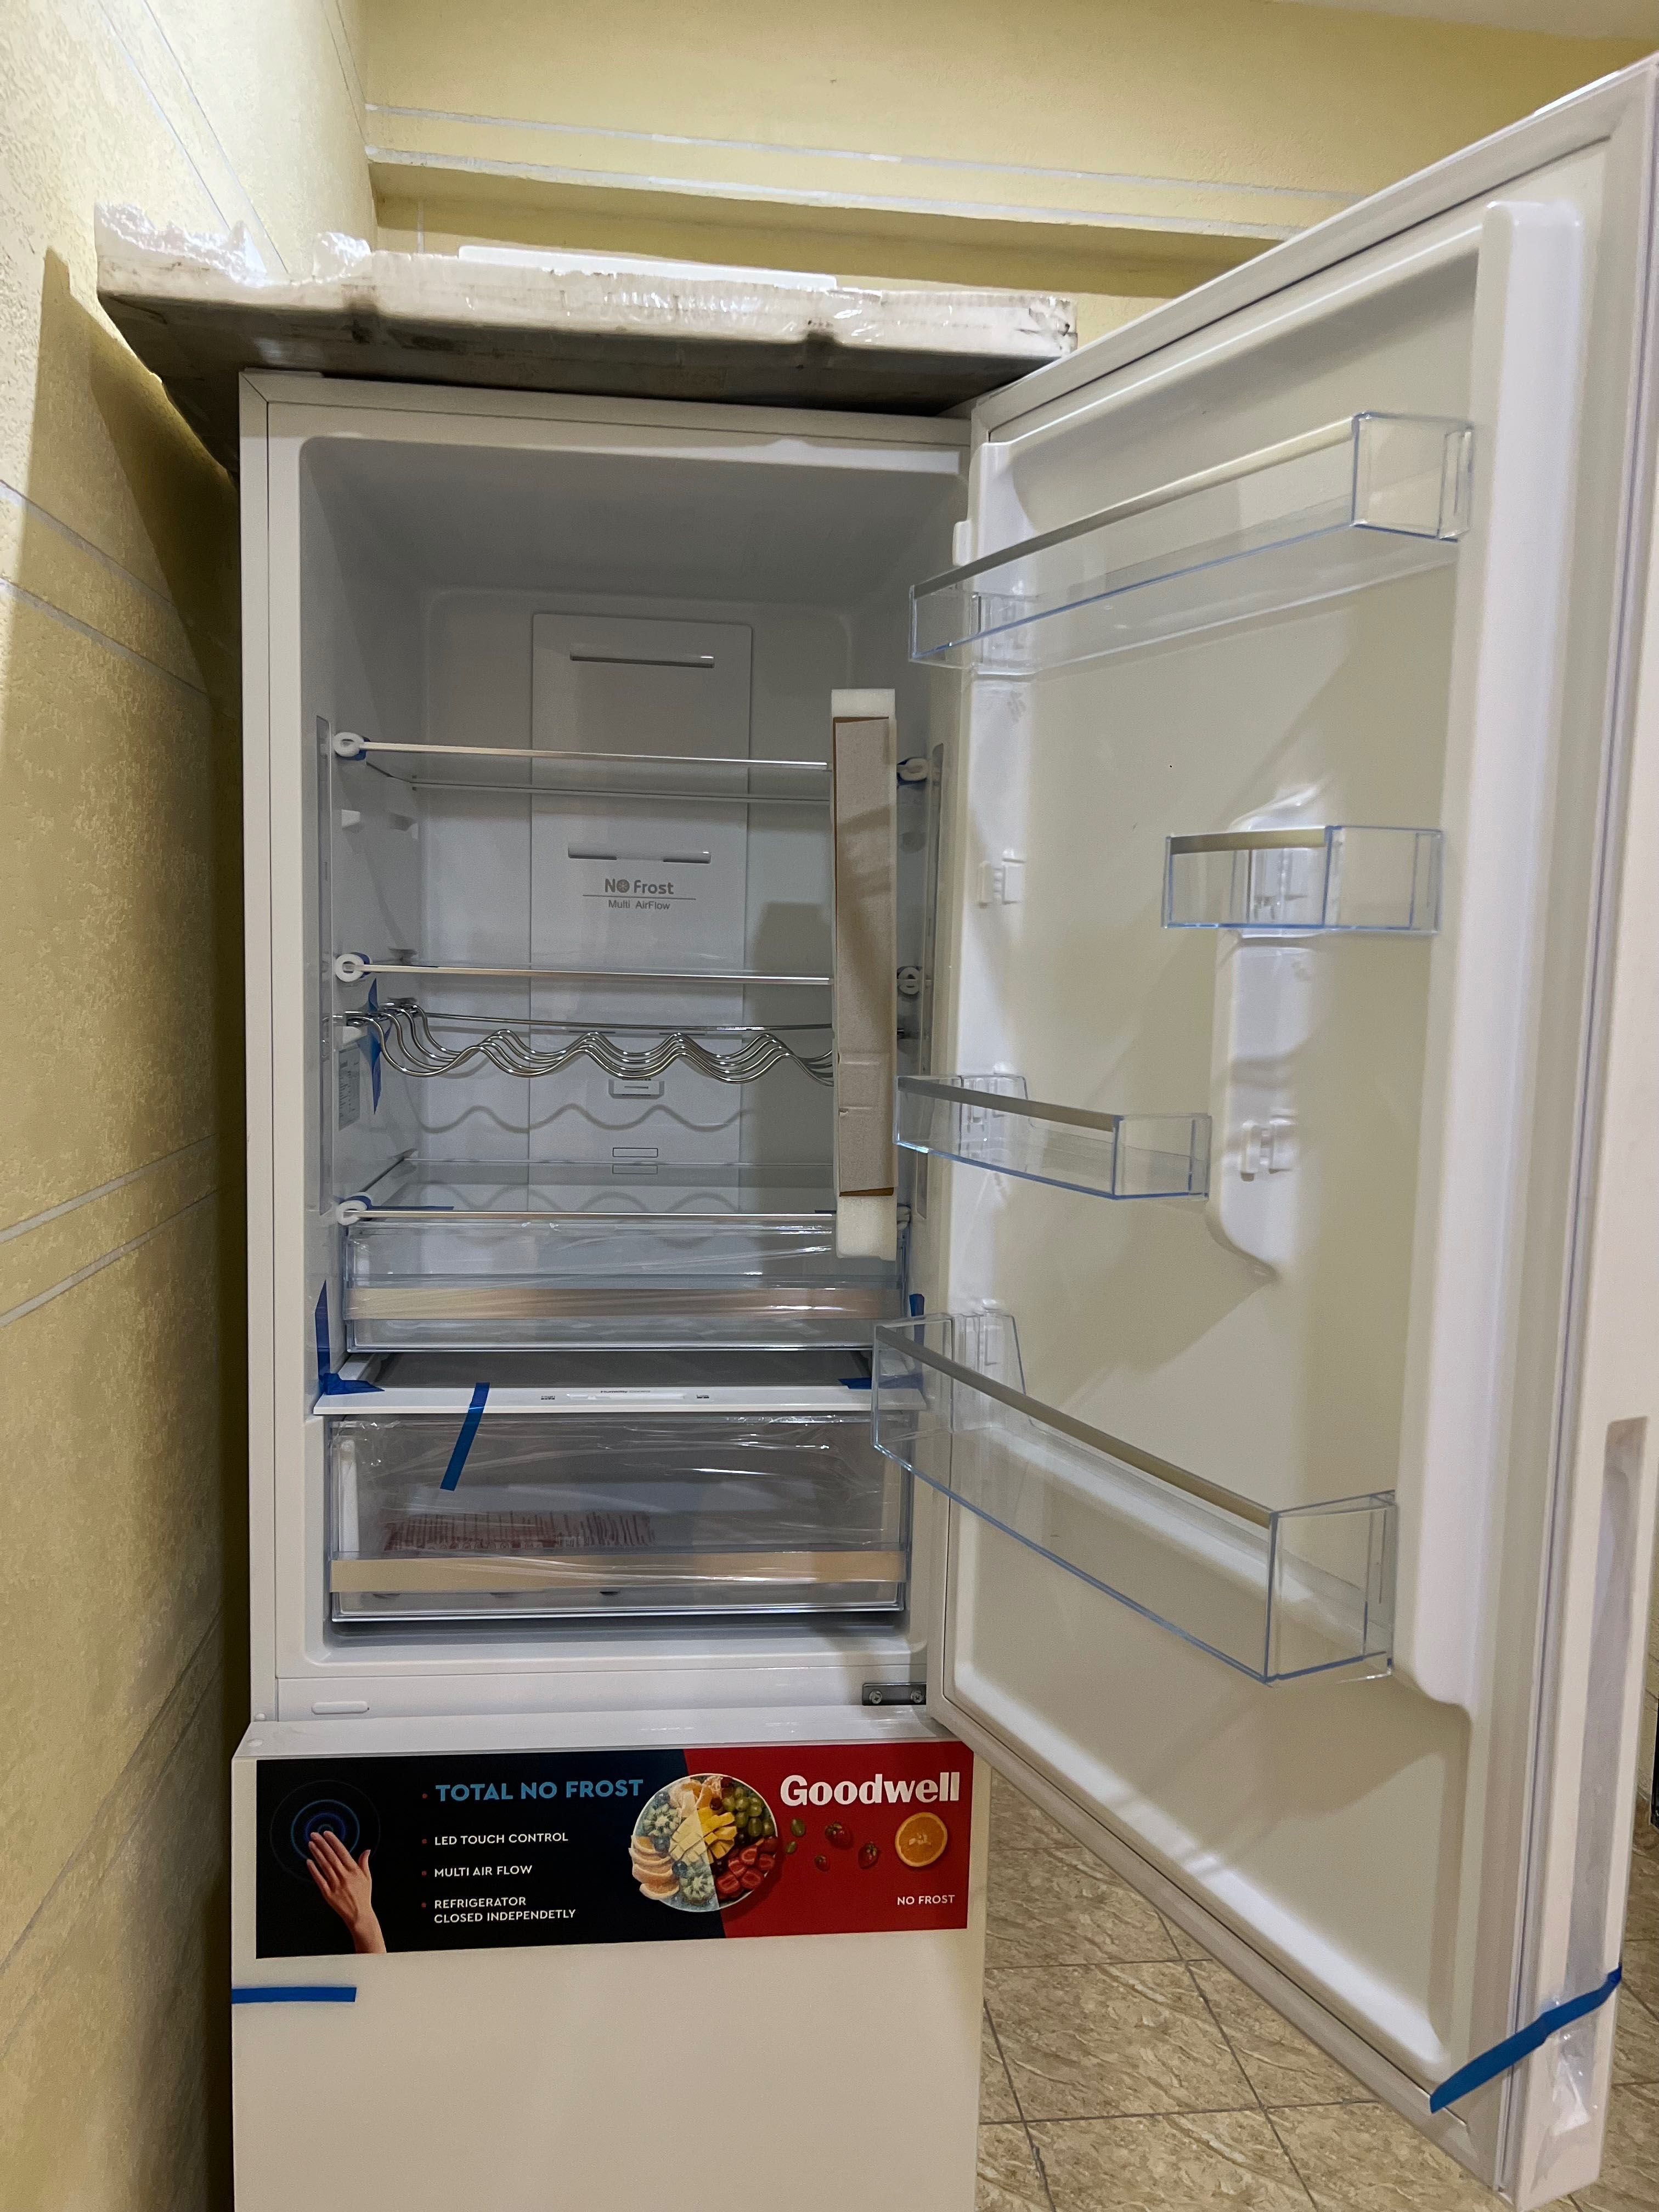 Новый холодильник Goodwell модель GRF - B318sSWL2